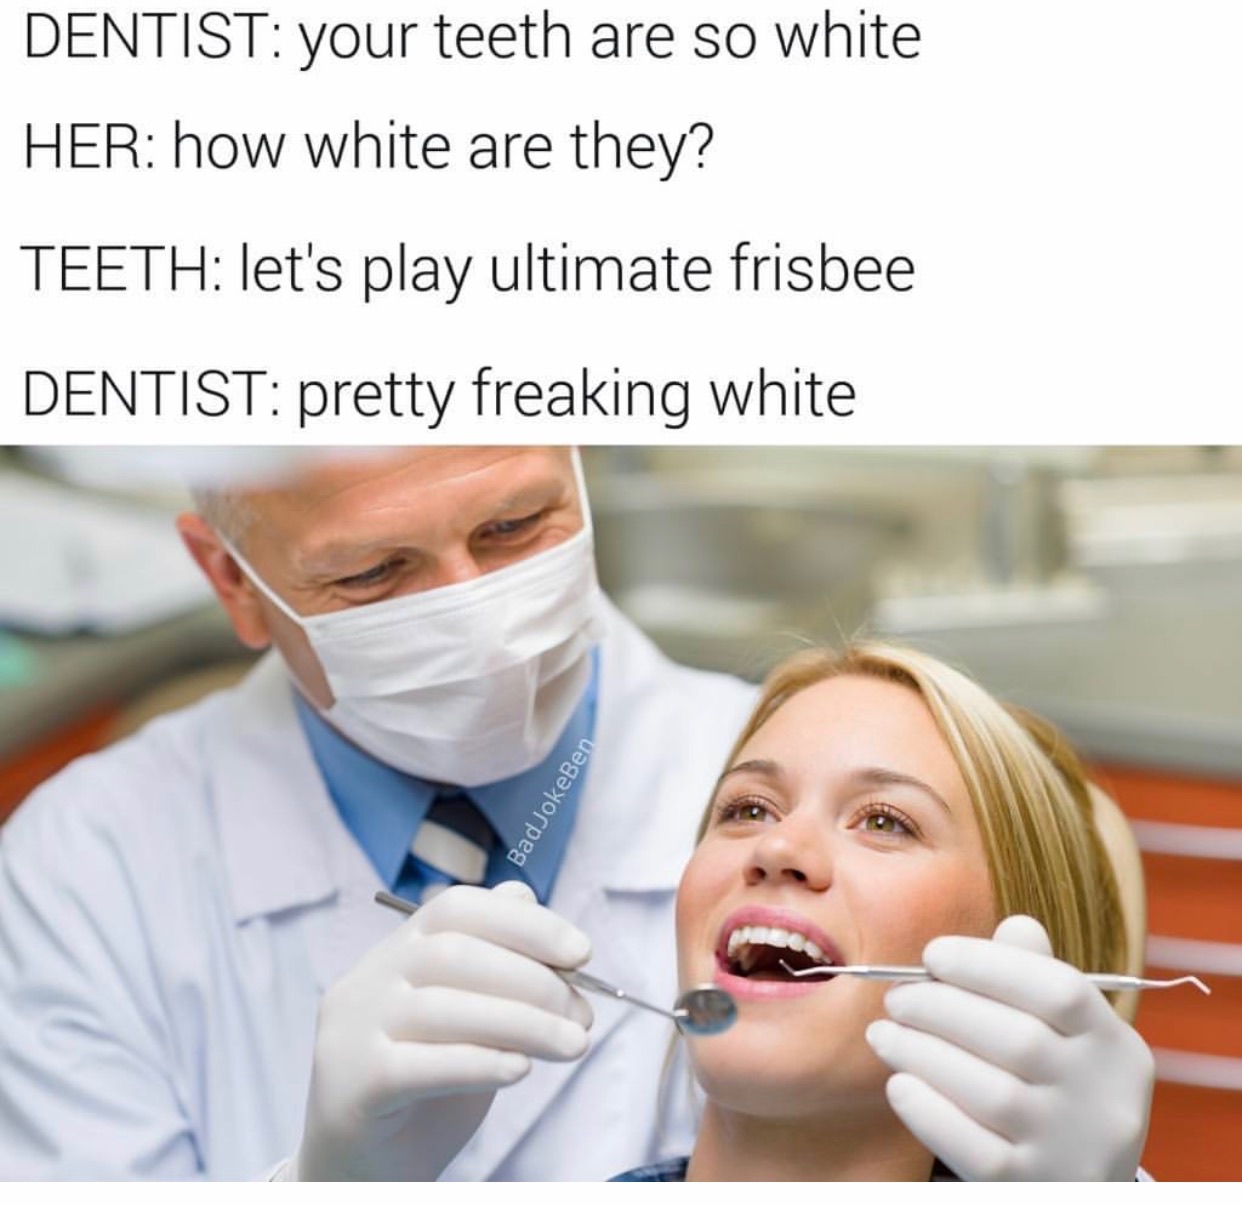 your teeth are so white meme - Dentist your teeth are so white Her how white are they? Teeth let's play ultimate frisbee Dentist pretty freaking white BadJokeBen